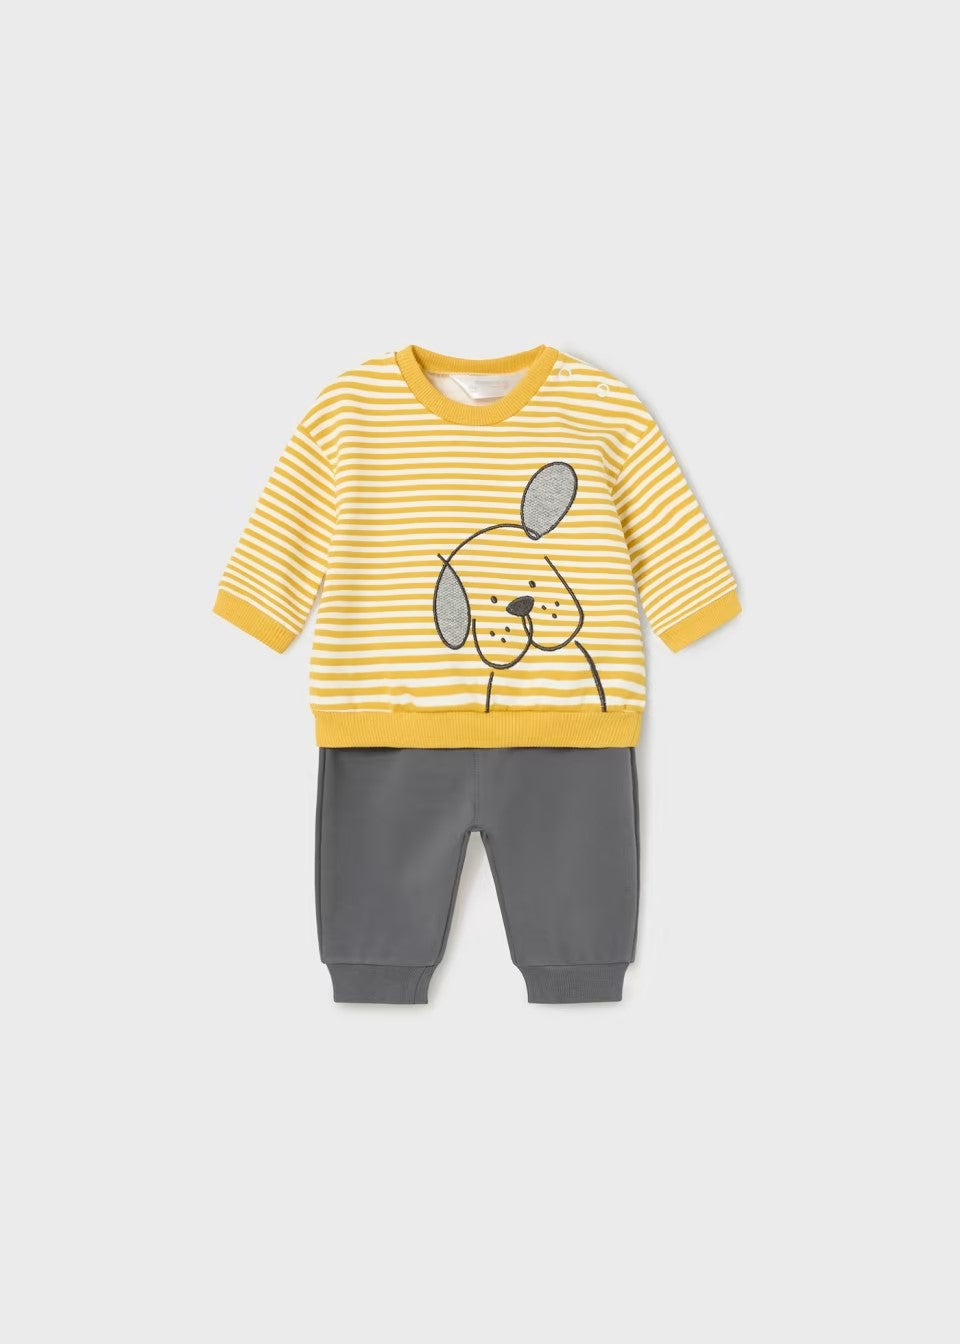 2681 - Infant Top/Pant Set - Yellow